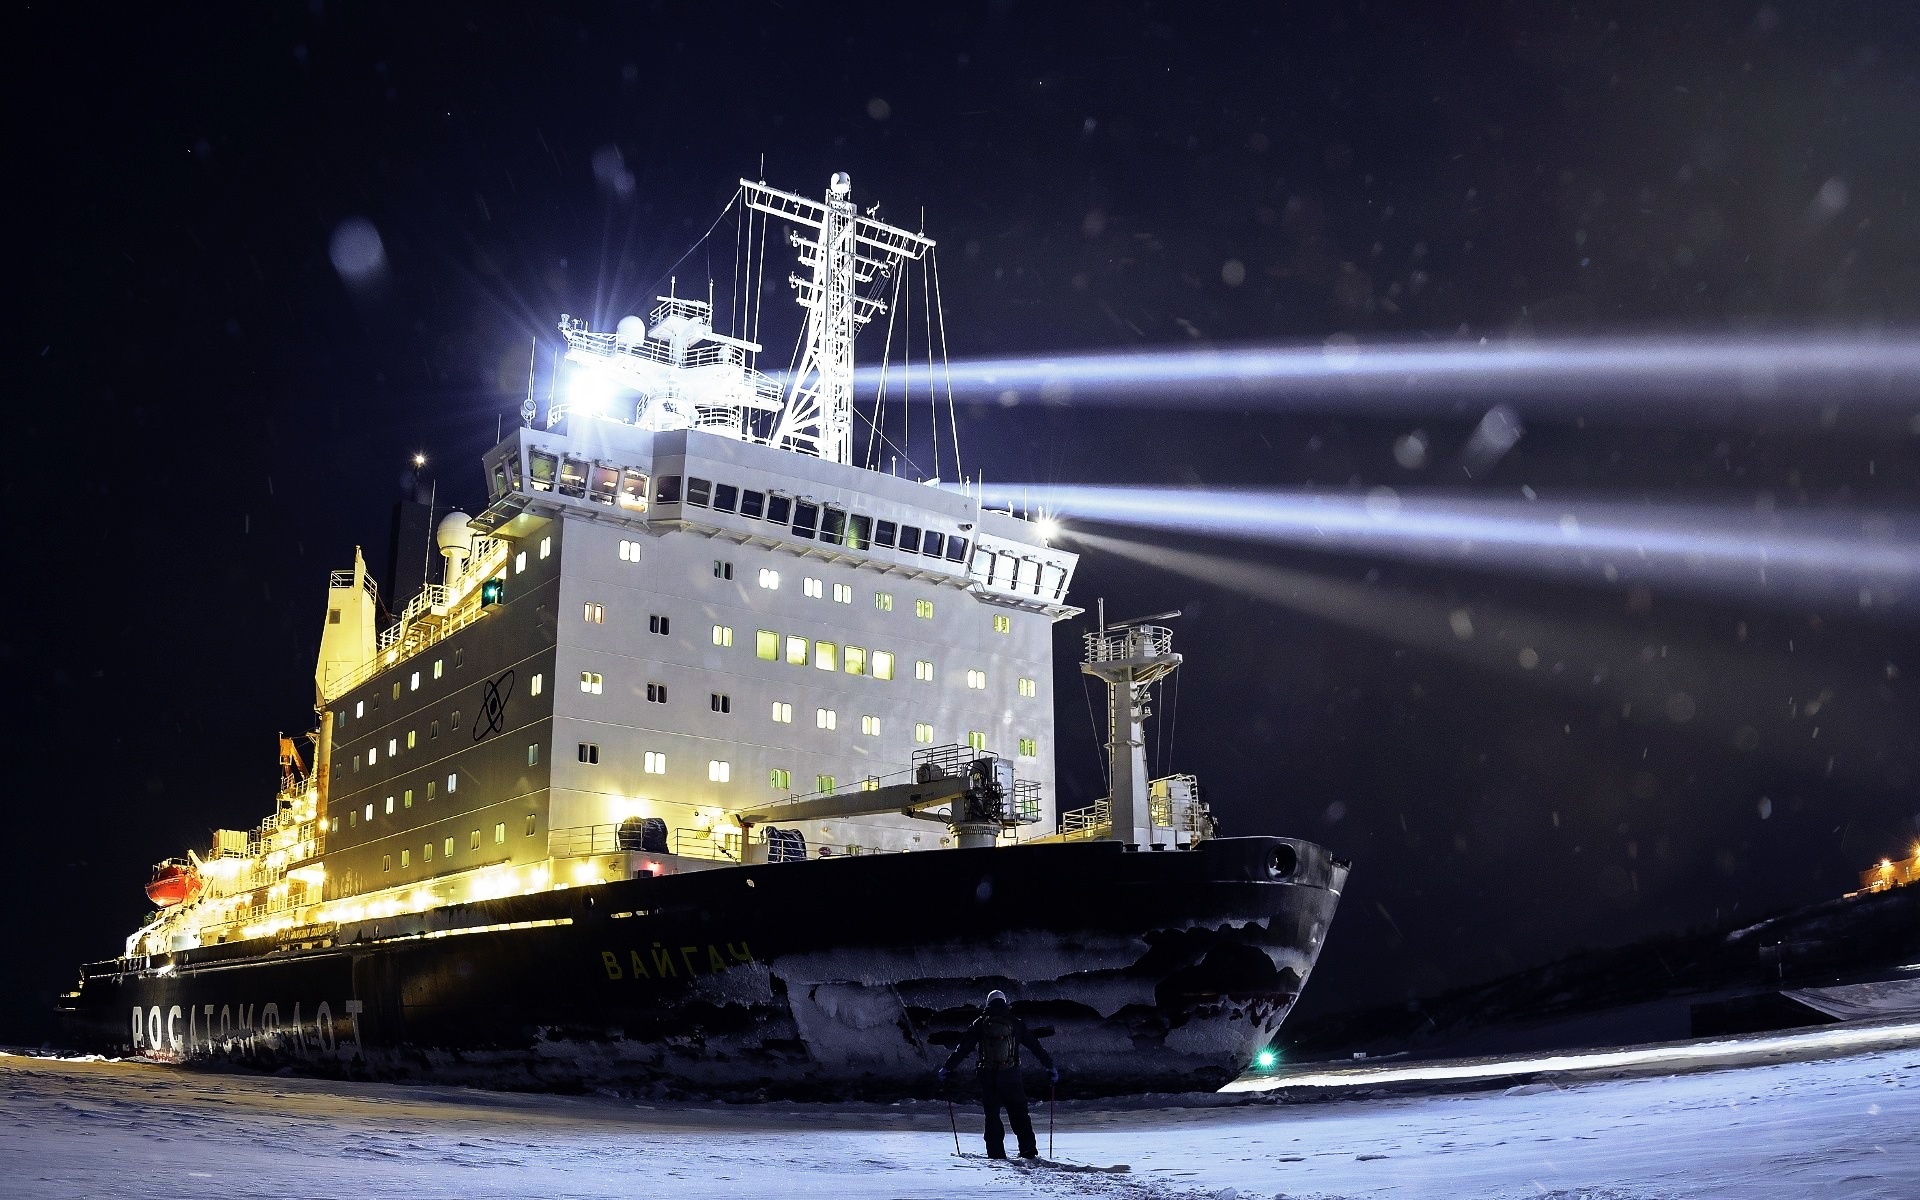 Wallpaper, Antarctica, icebreakers, ship, ice, snow, cold, snowing, men, night, lights, Russian 1920x1200